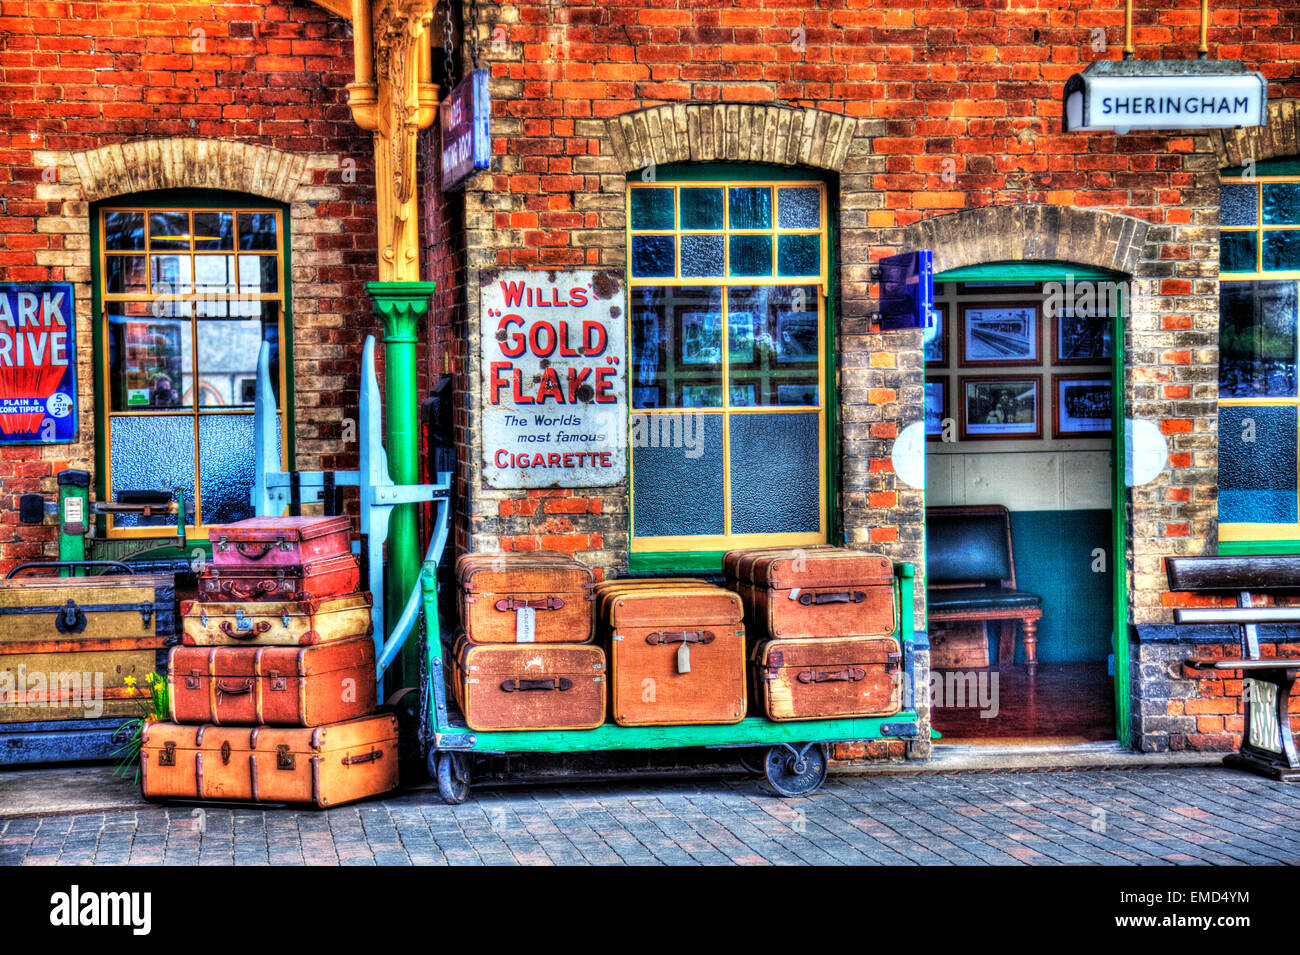 Sheringham North Norfolk uk inglaterra equipaje viaje casos maletas viejo tronco nostálgico Foto de stock